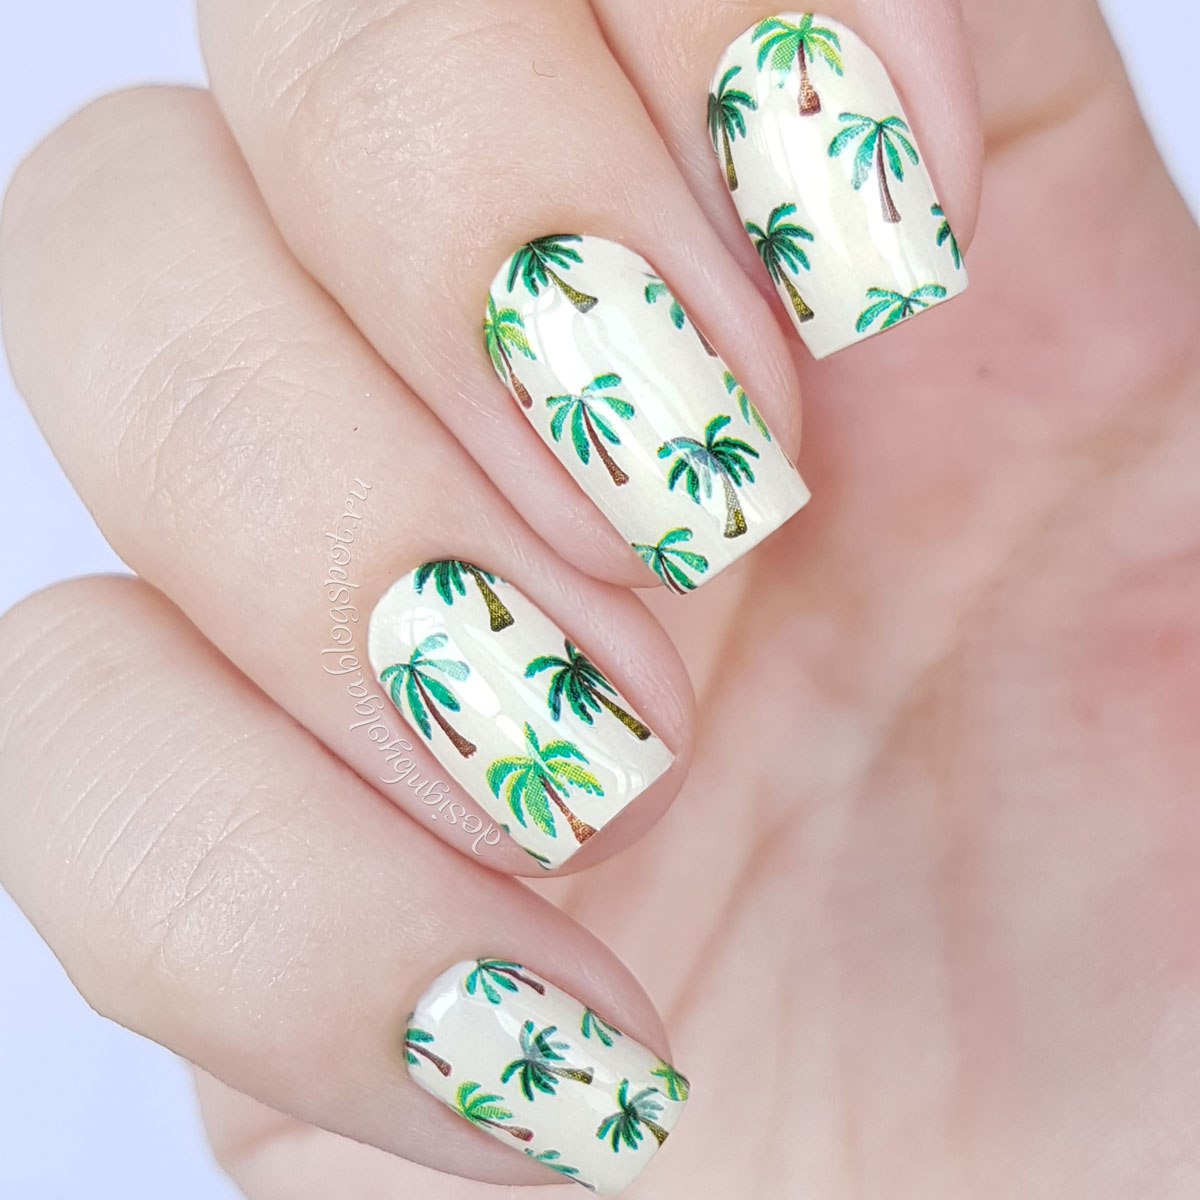 Decal nail sticker Palms